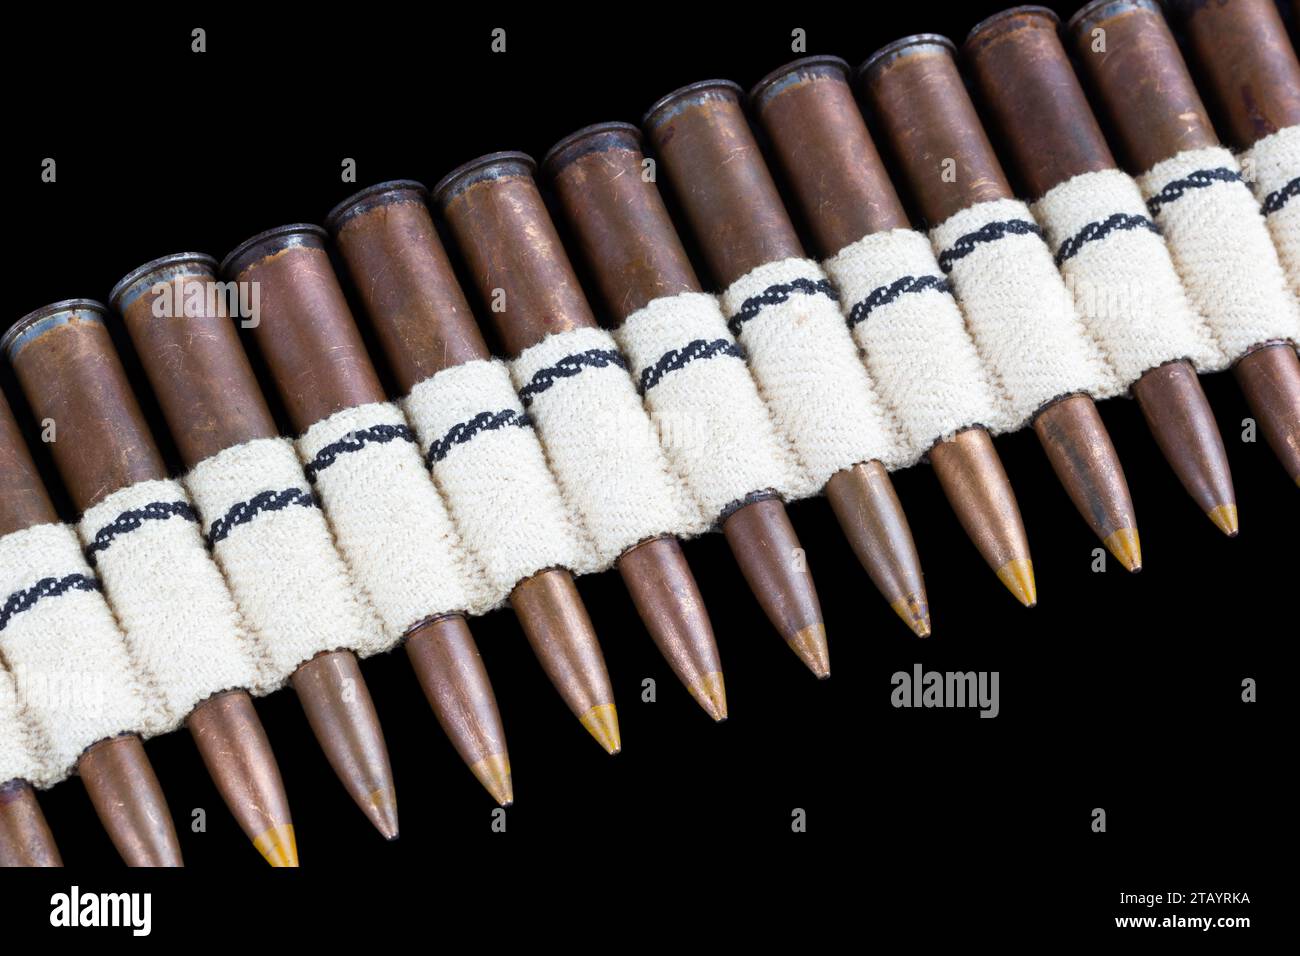 https://c8.alamy.com/comp/2TAYRKA/vintage-canvas-ammo-belt-with-cartridges-isolated-on-black-background-2TAYRKA.jpg